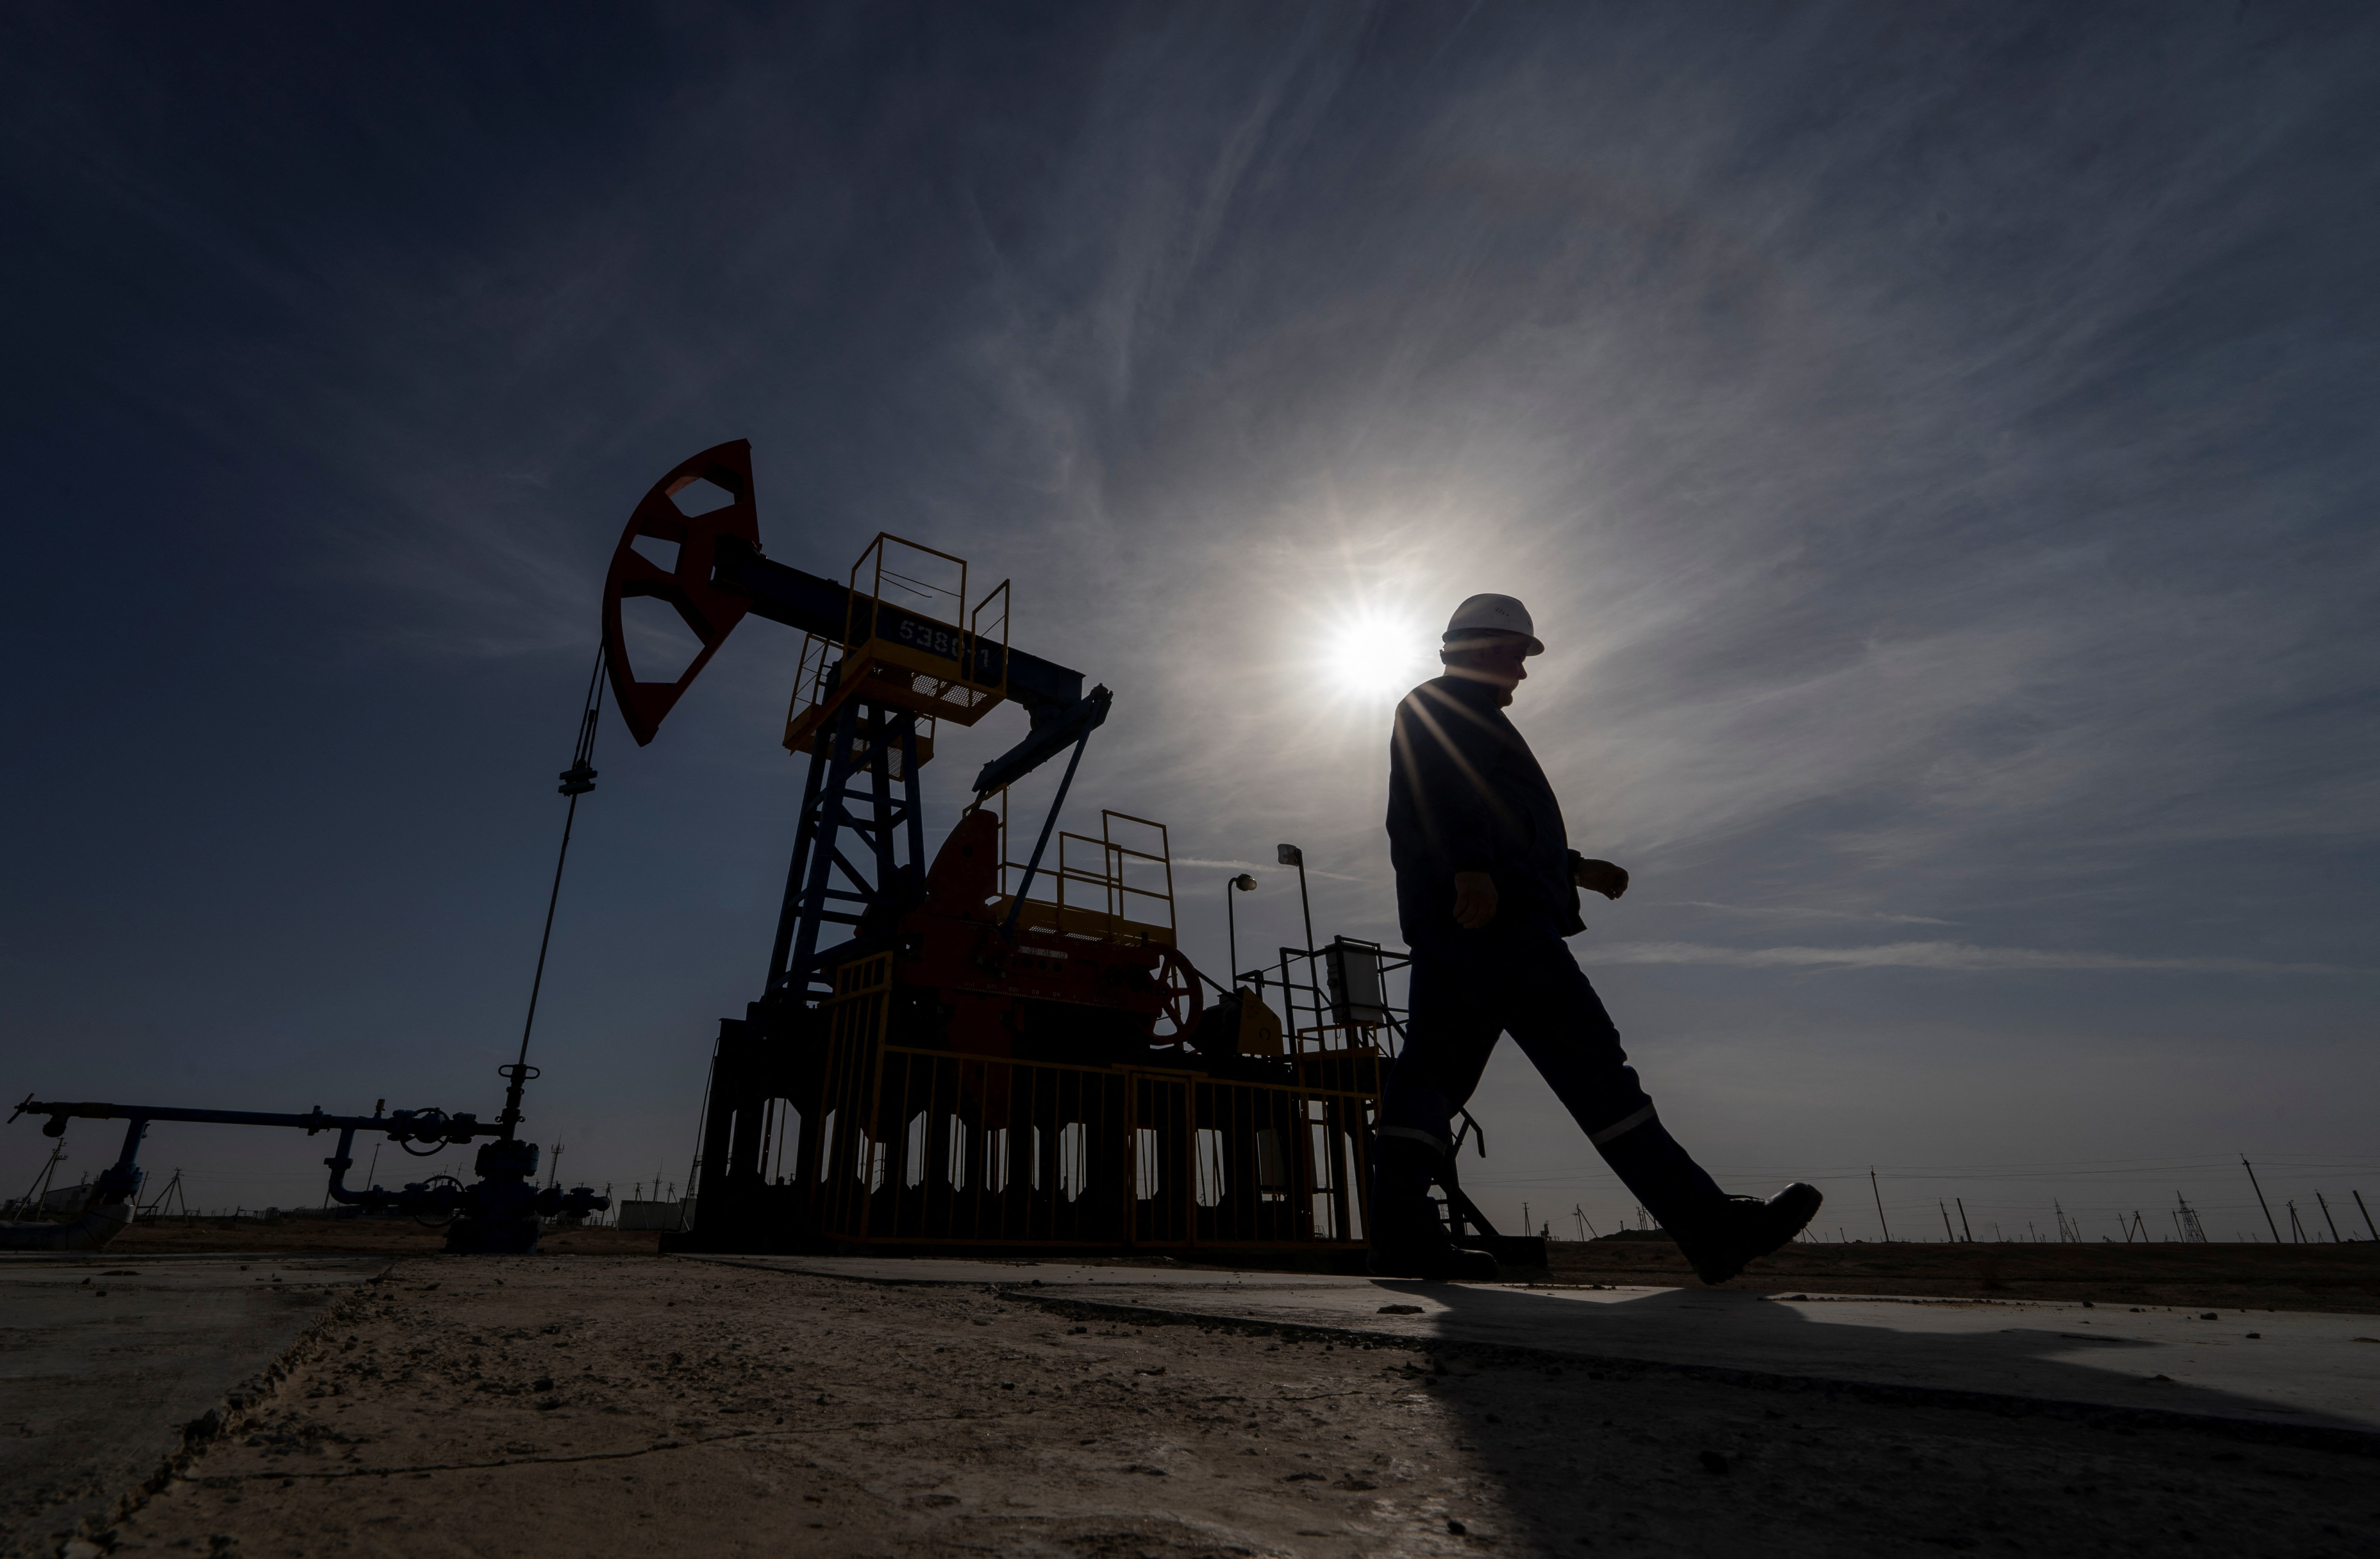 Crude oil production in Kazakhstan